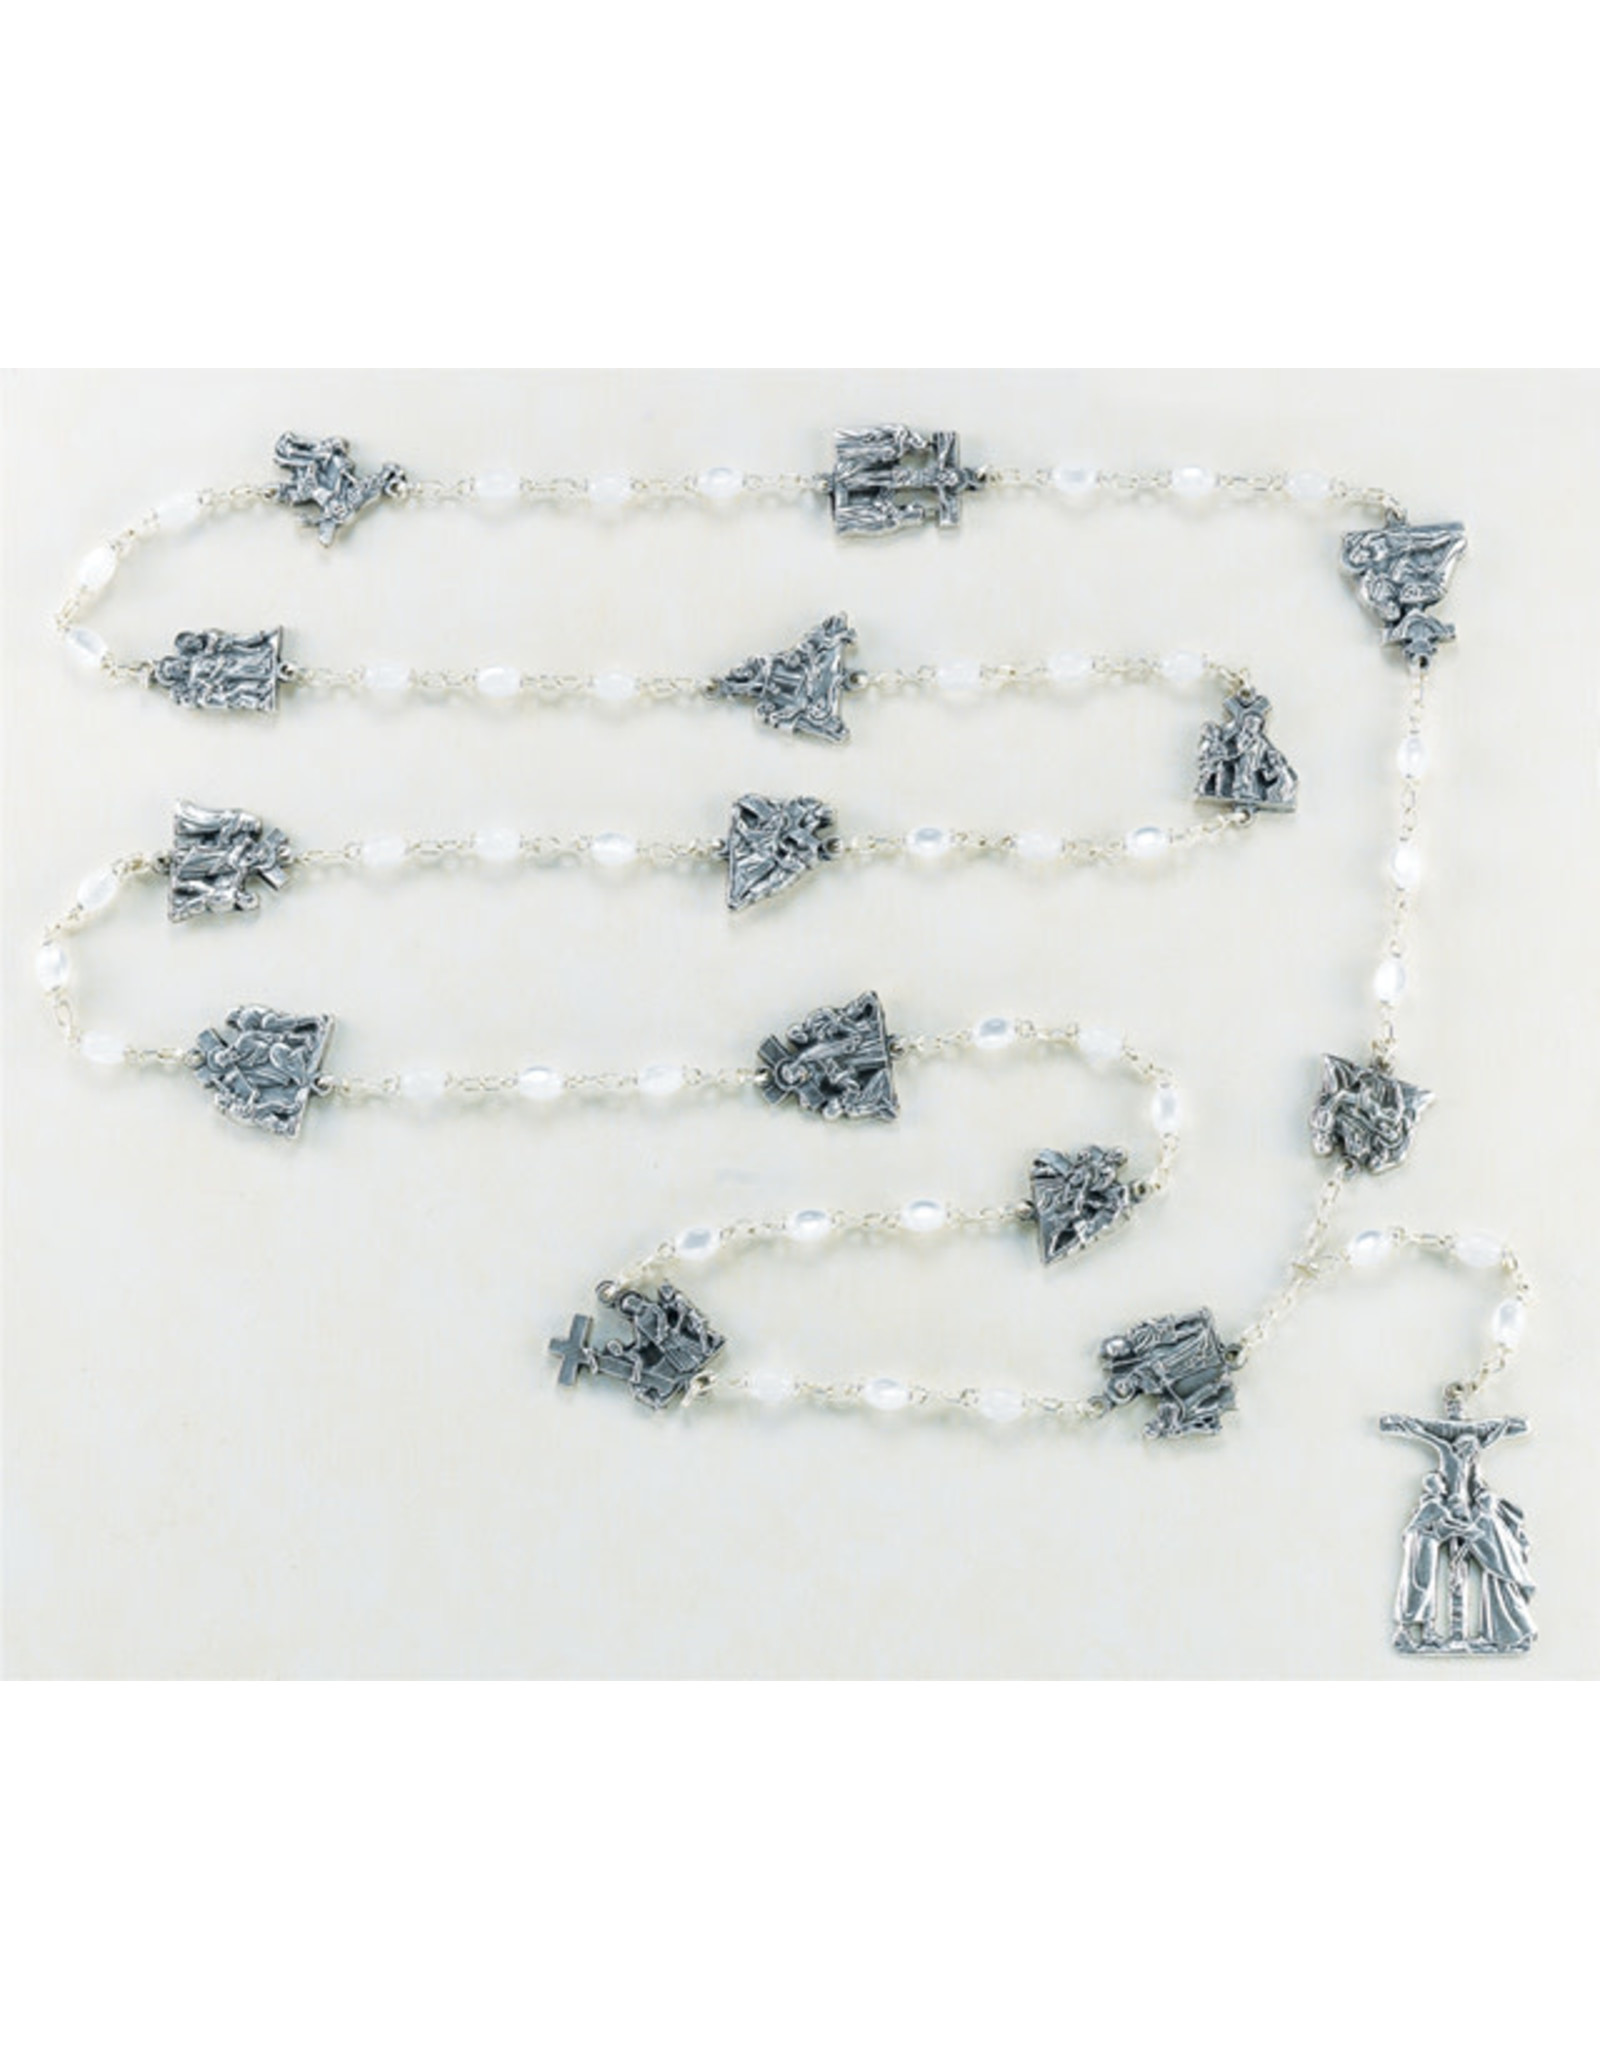 Hirten Via Crucis White Glass Bead Stations of the Cross Rosary